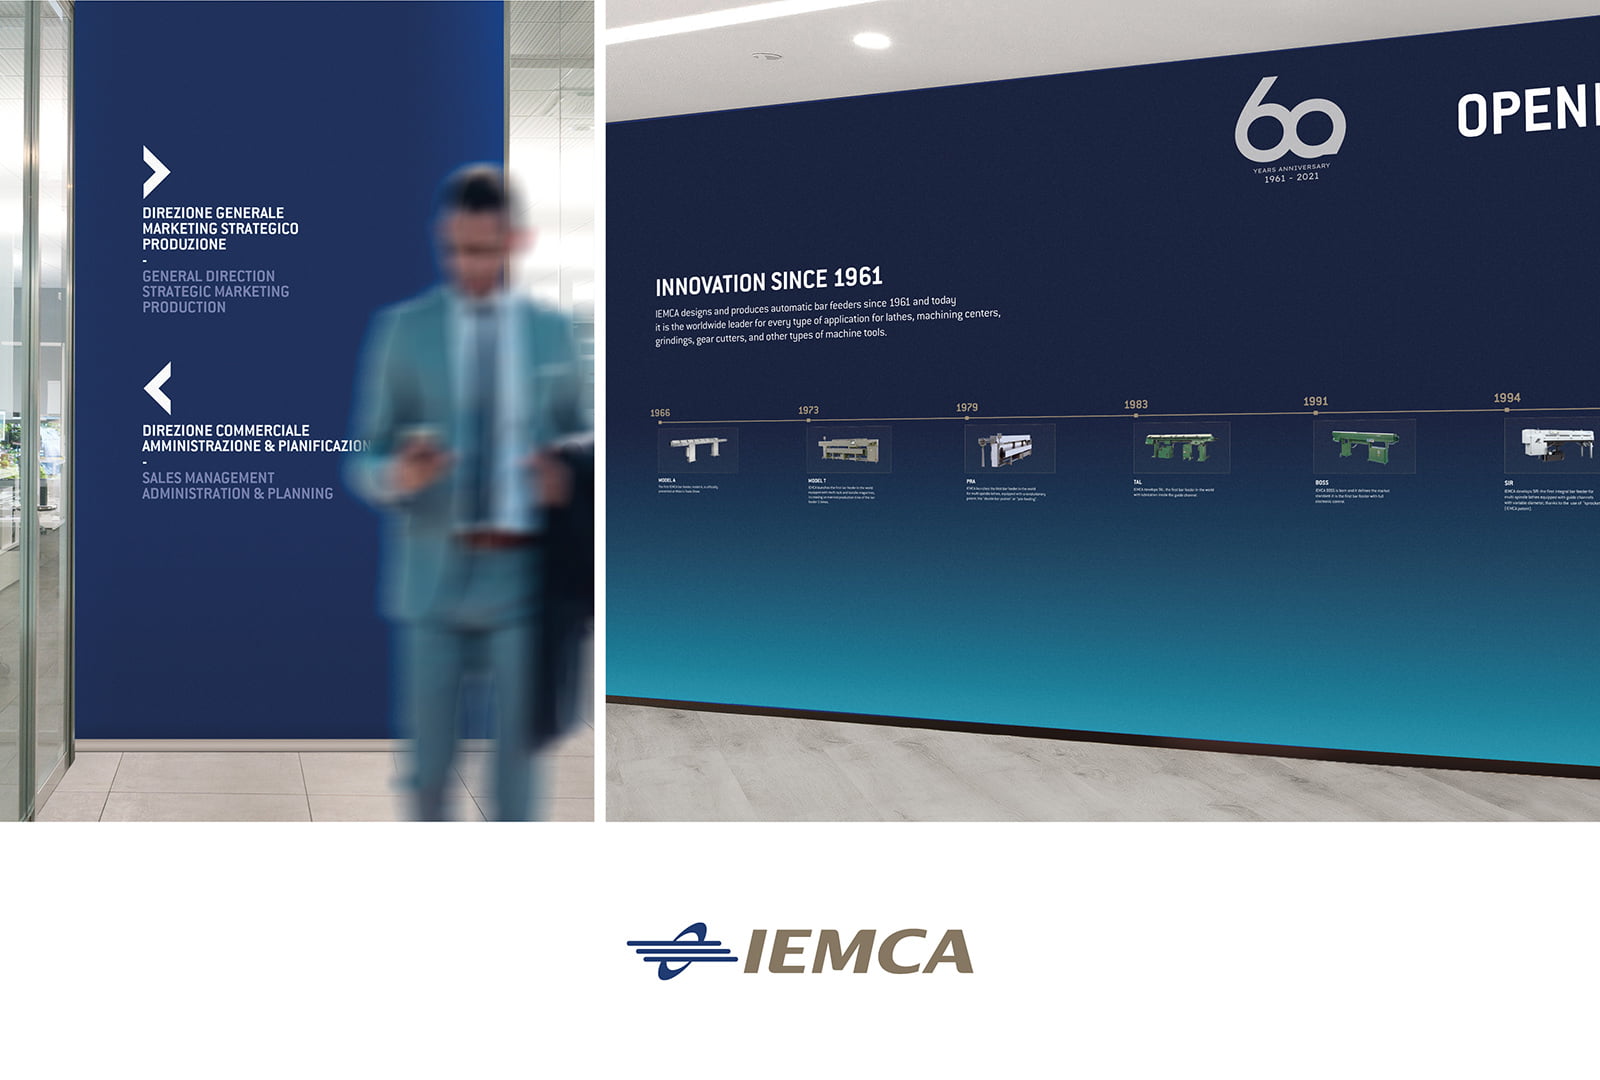 Iemca-Signage